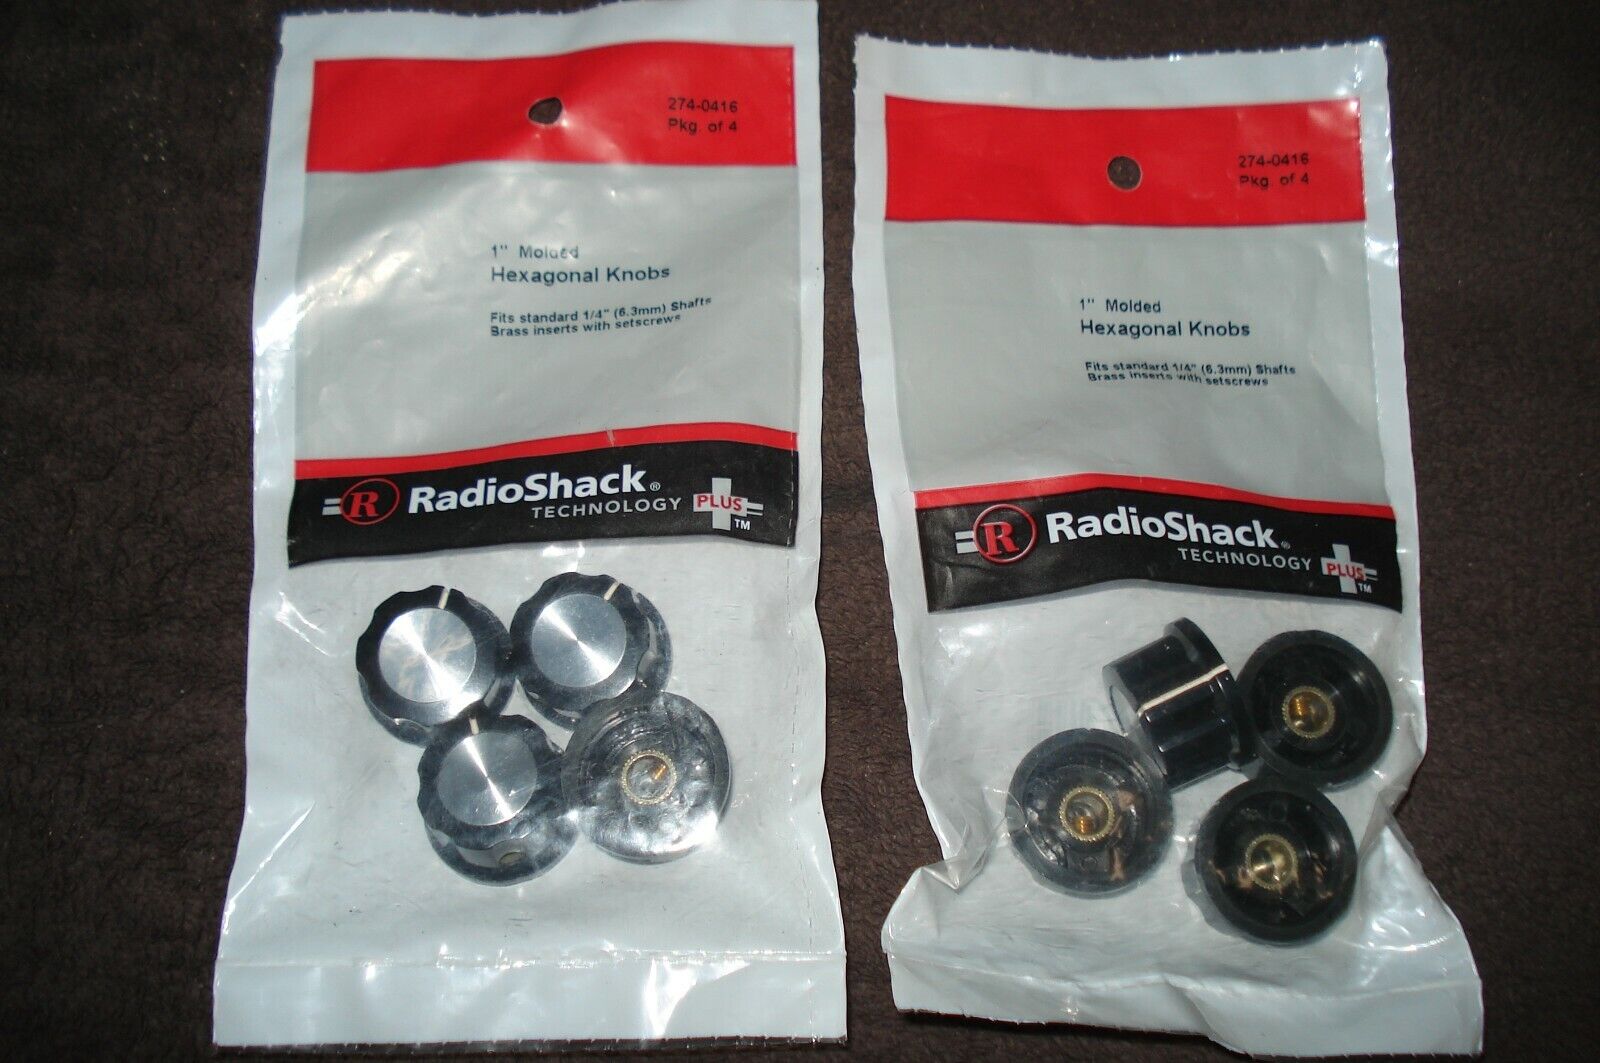 Radio Shack 1” Molded Hexagonal Knobs (Lot of 2)